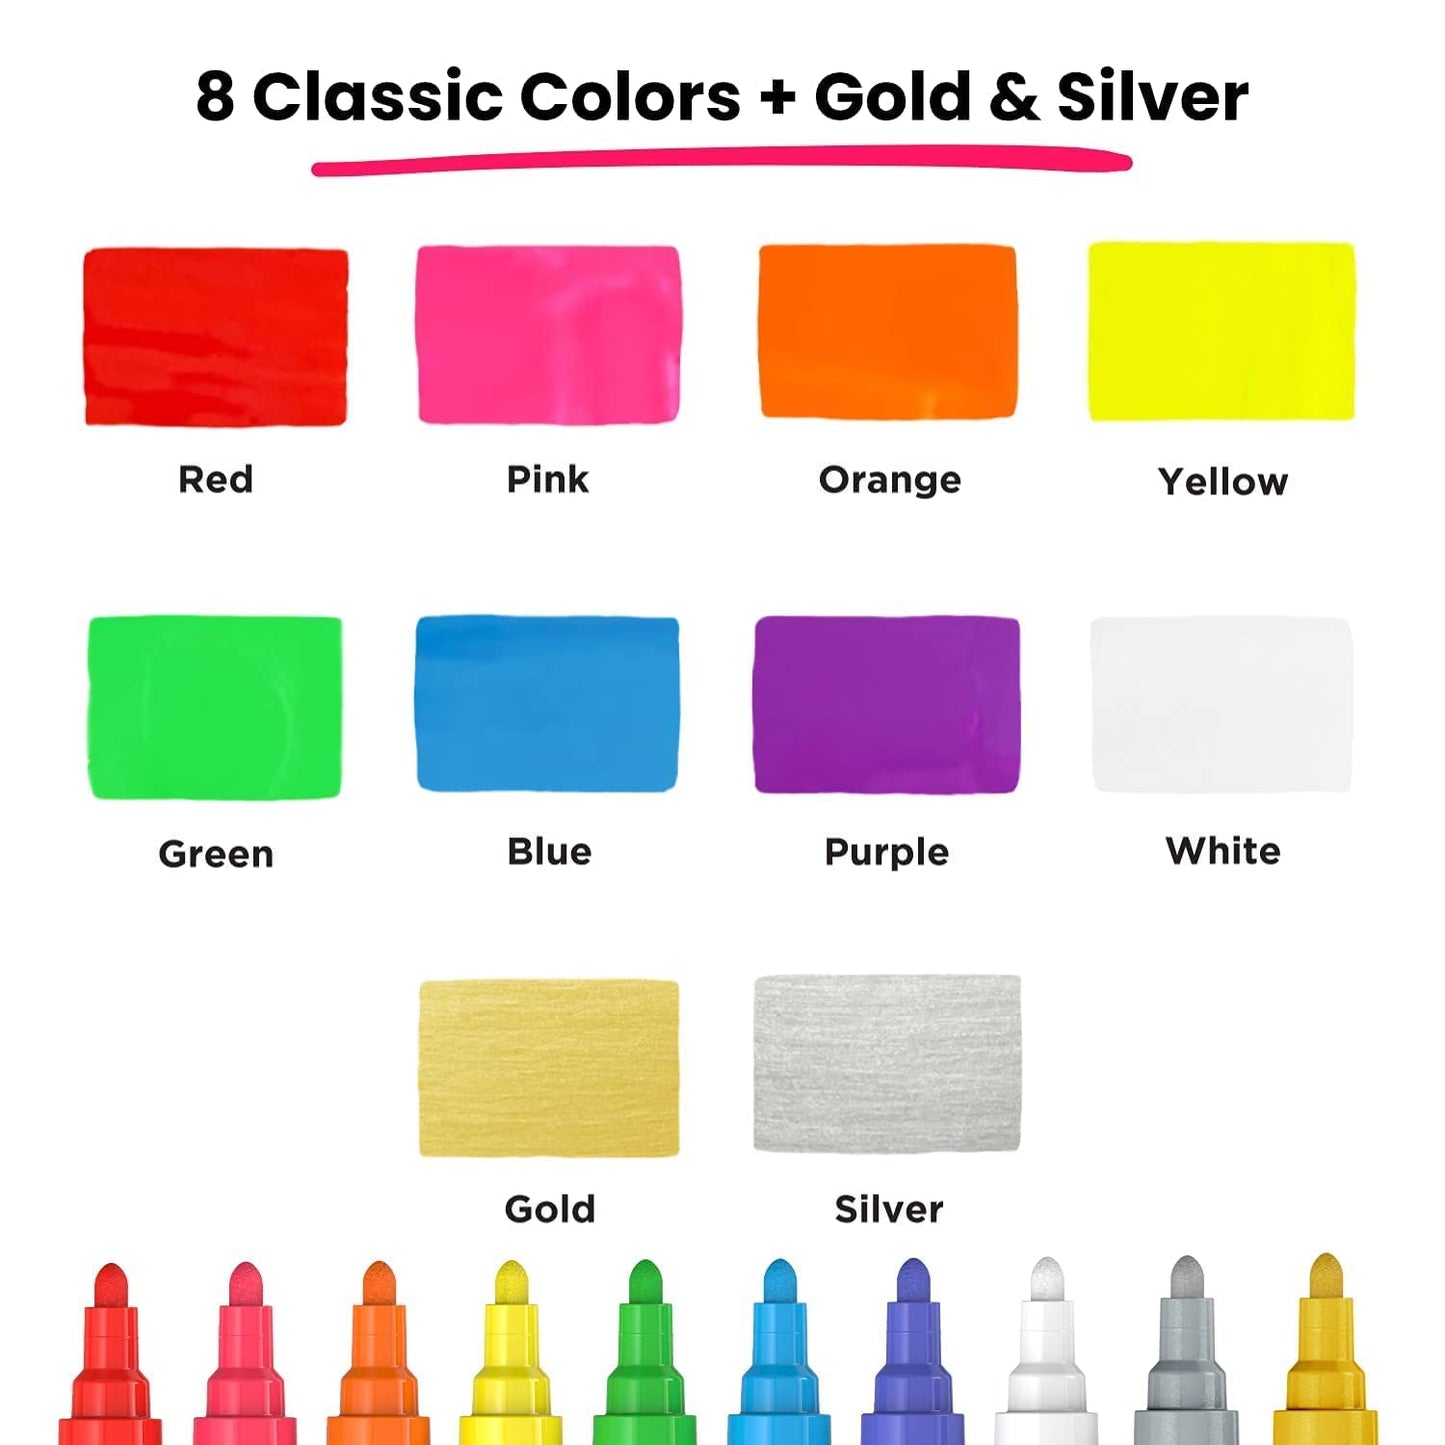 Chalkola Trendy Art Bundle - 6 White + 10 Bold Colors Liquid Markers